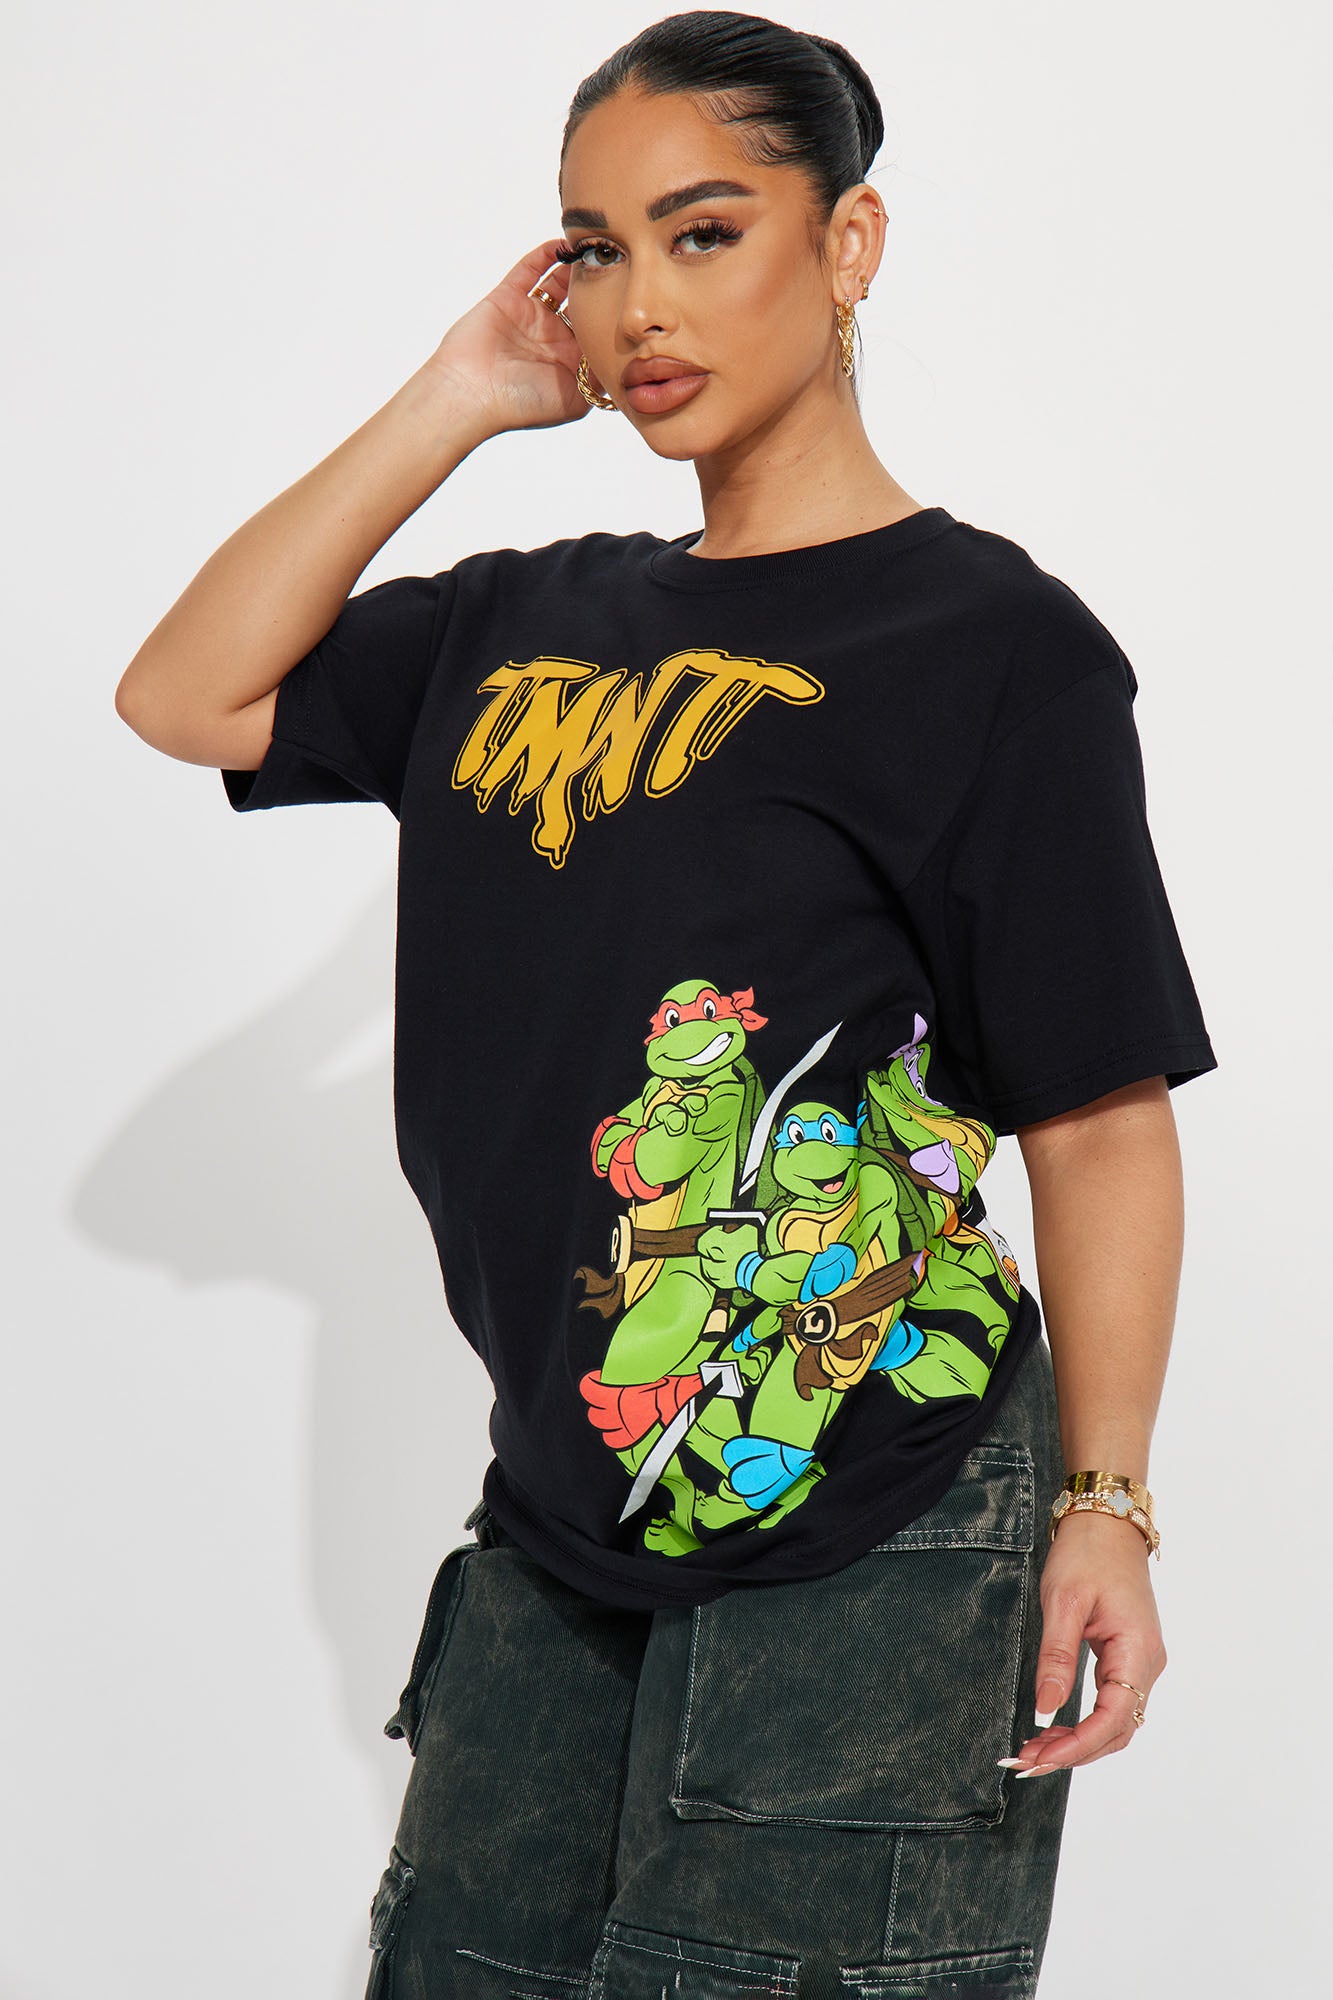 Teenage Mutant Ninja Turtles Donatello Costume Regular Fit Short Sleeve Shirt 2x Large / Regular Fit